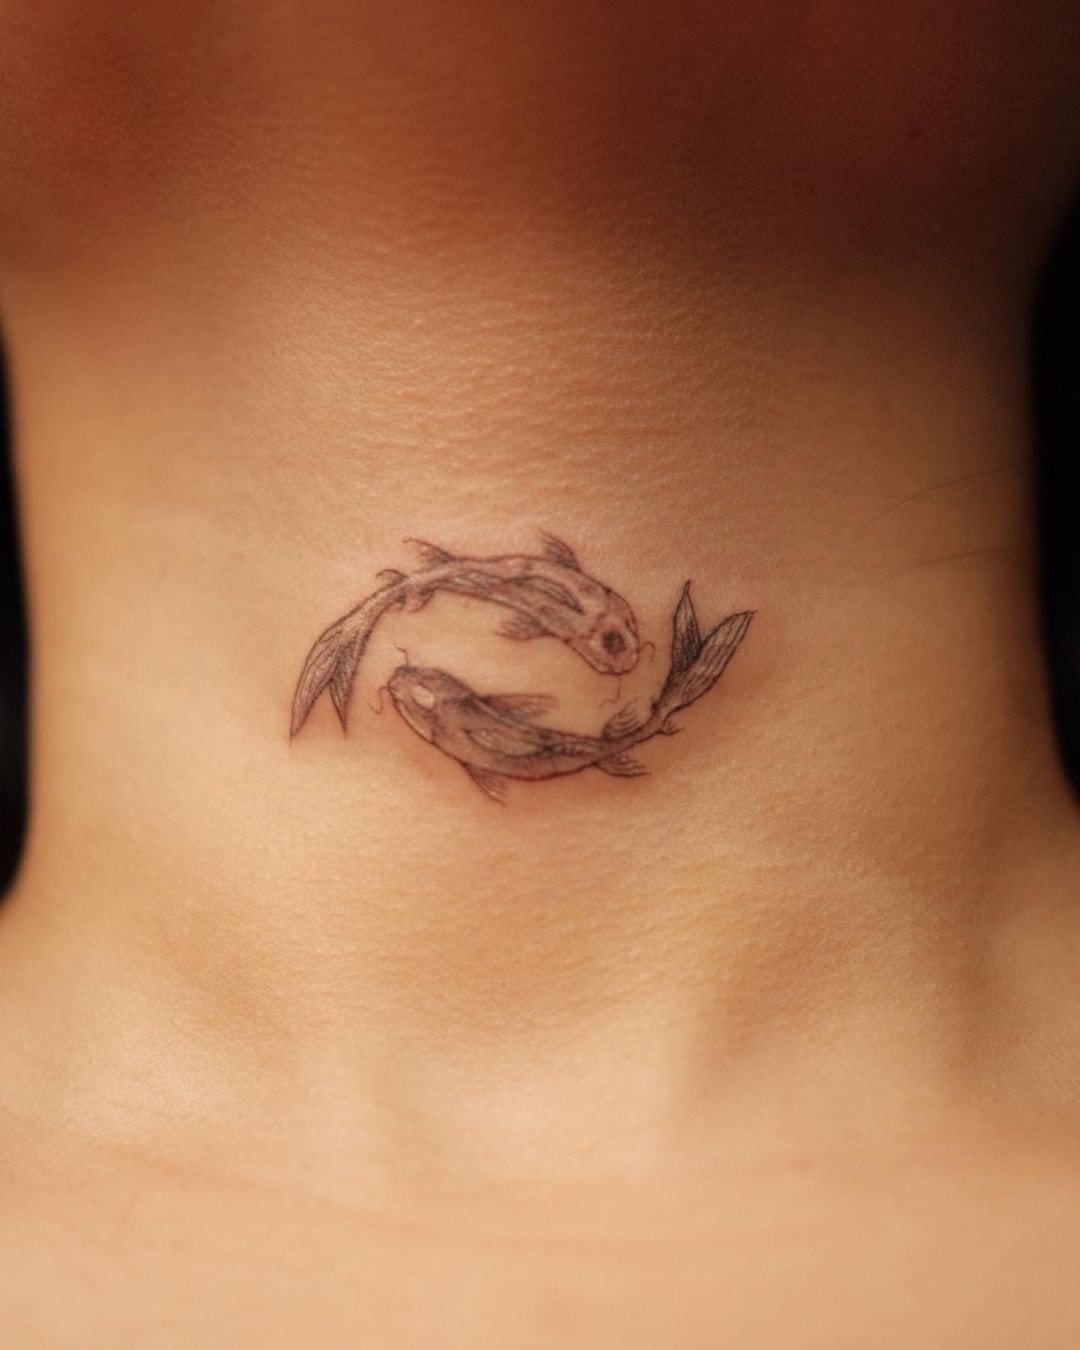 60 Impressive Neck Tattoo Ideas That You Will Love - Blurmark | Small neck  tattoos, Girl neck tattoos, Front neck tattoo